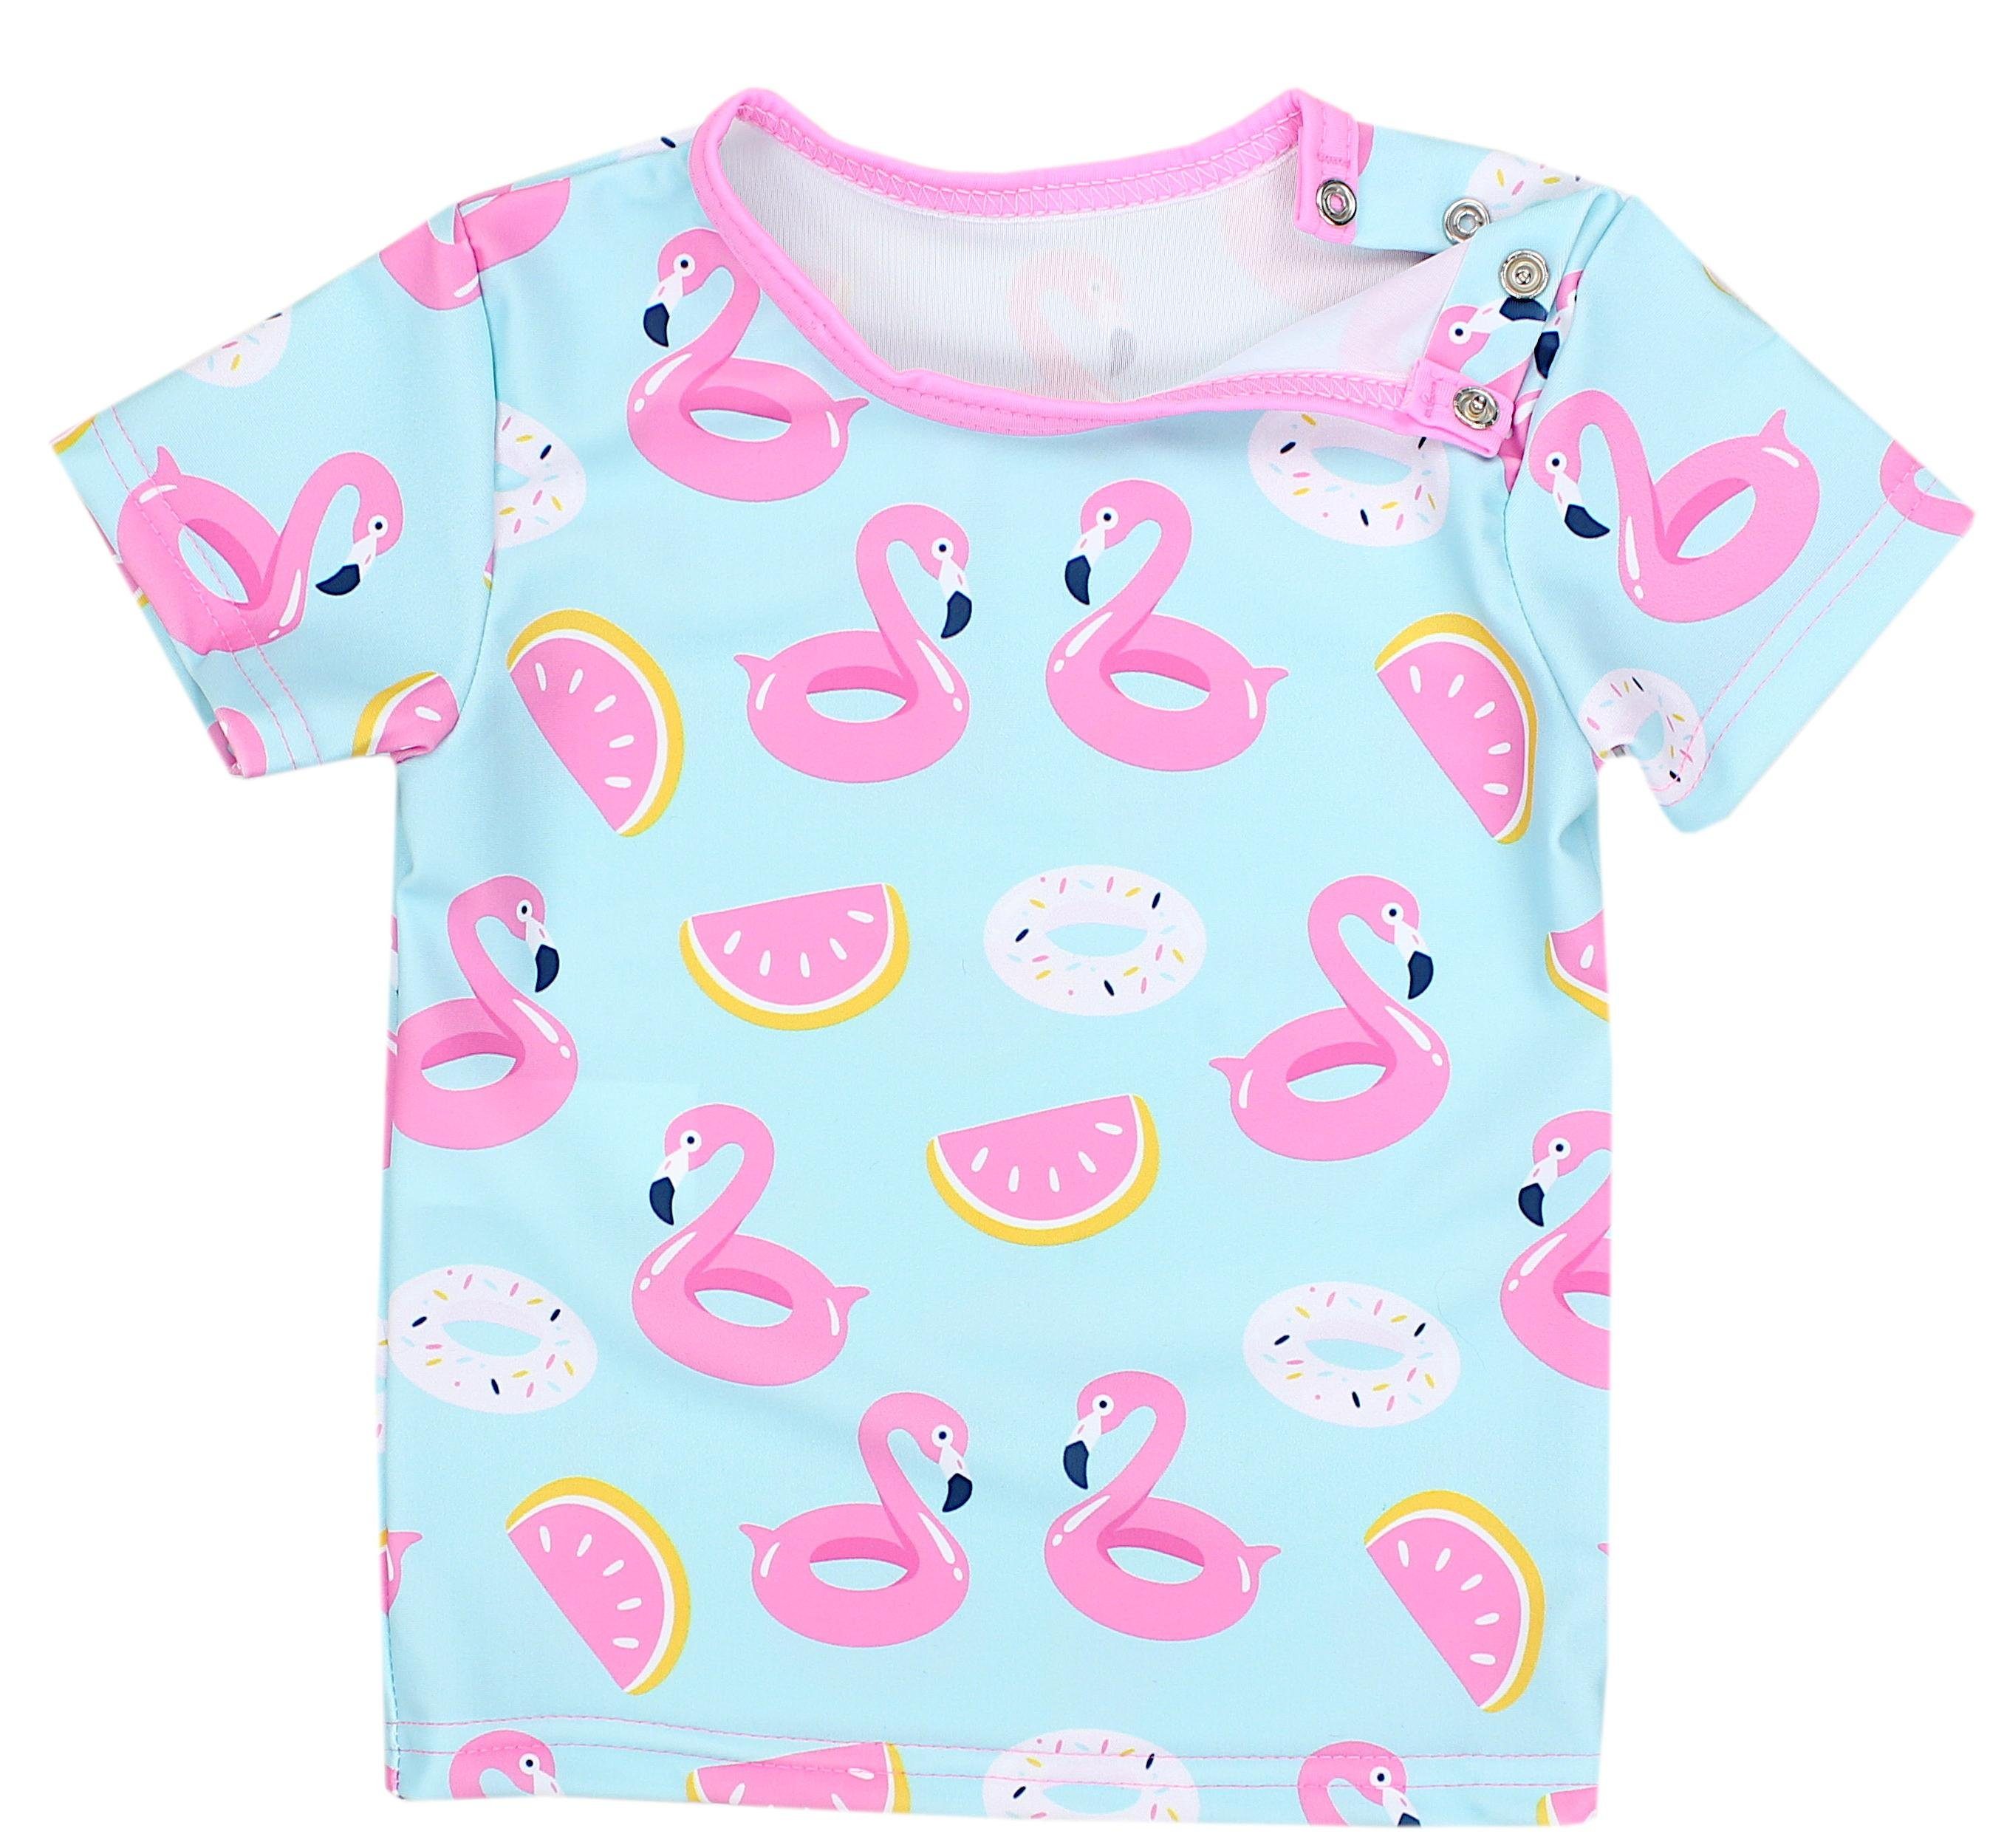 Shirt Baby UV-Schutz Badehose Badeanzug Flamingos Badeanzug / Kinder Zweiteiler Rosa Set Aquarti Hellgrün Mädchen